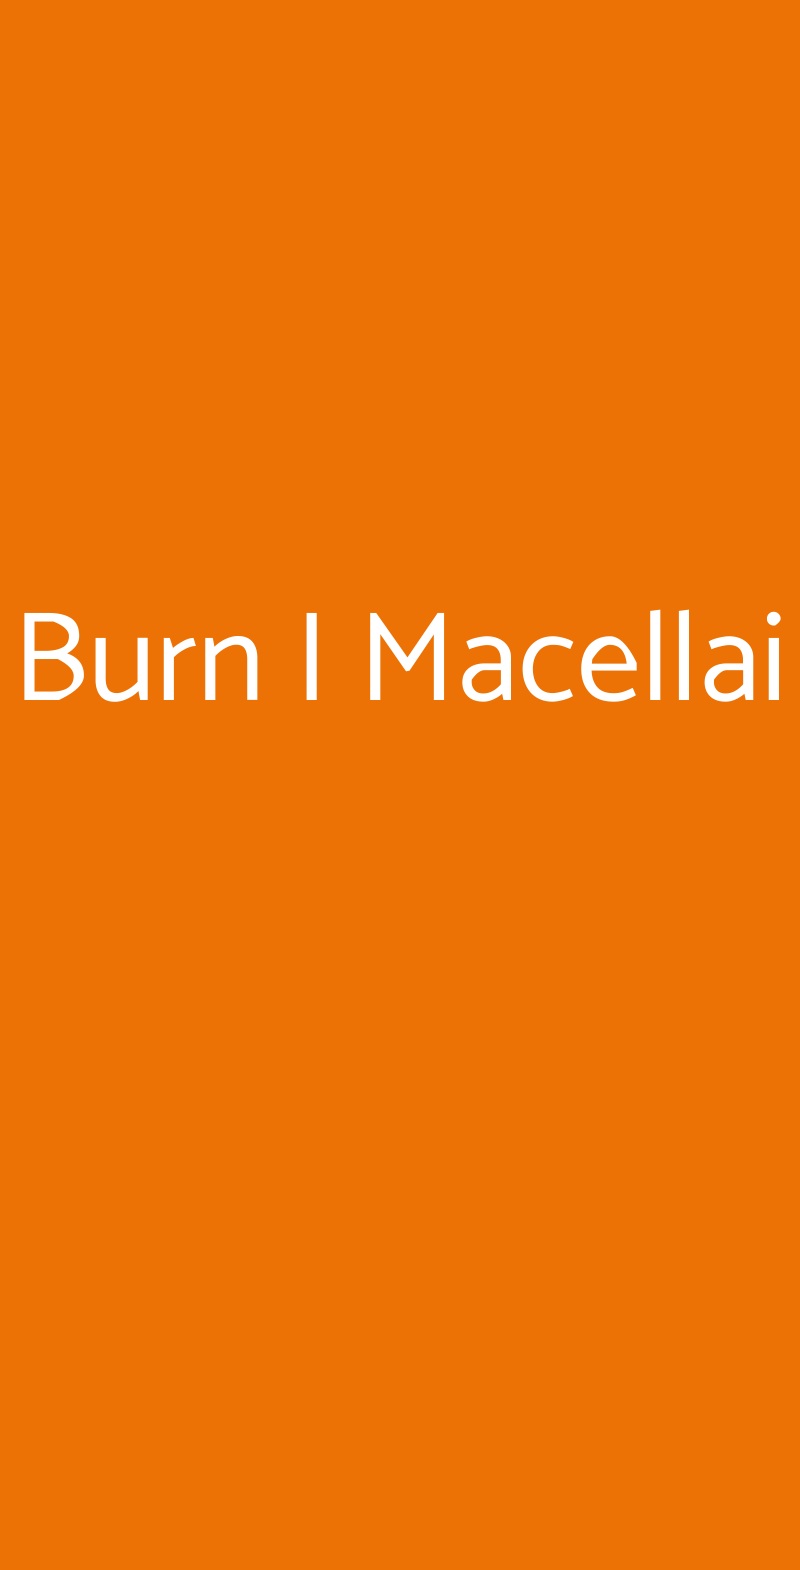 Burn I Macellai Milano menù 1 pagina